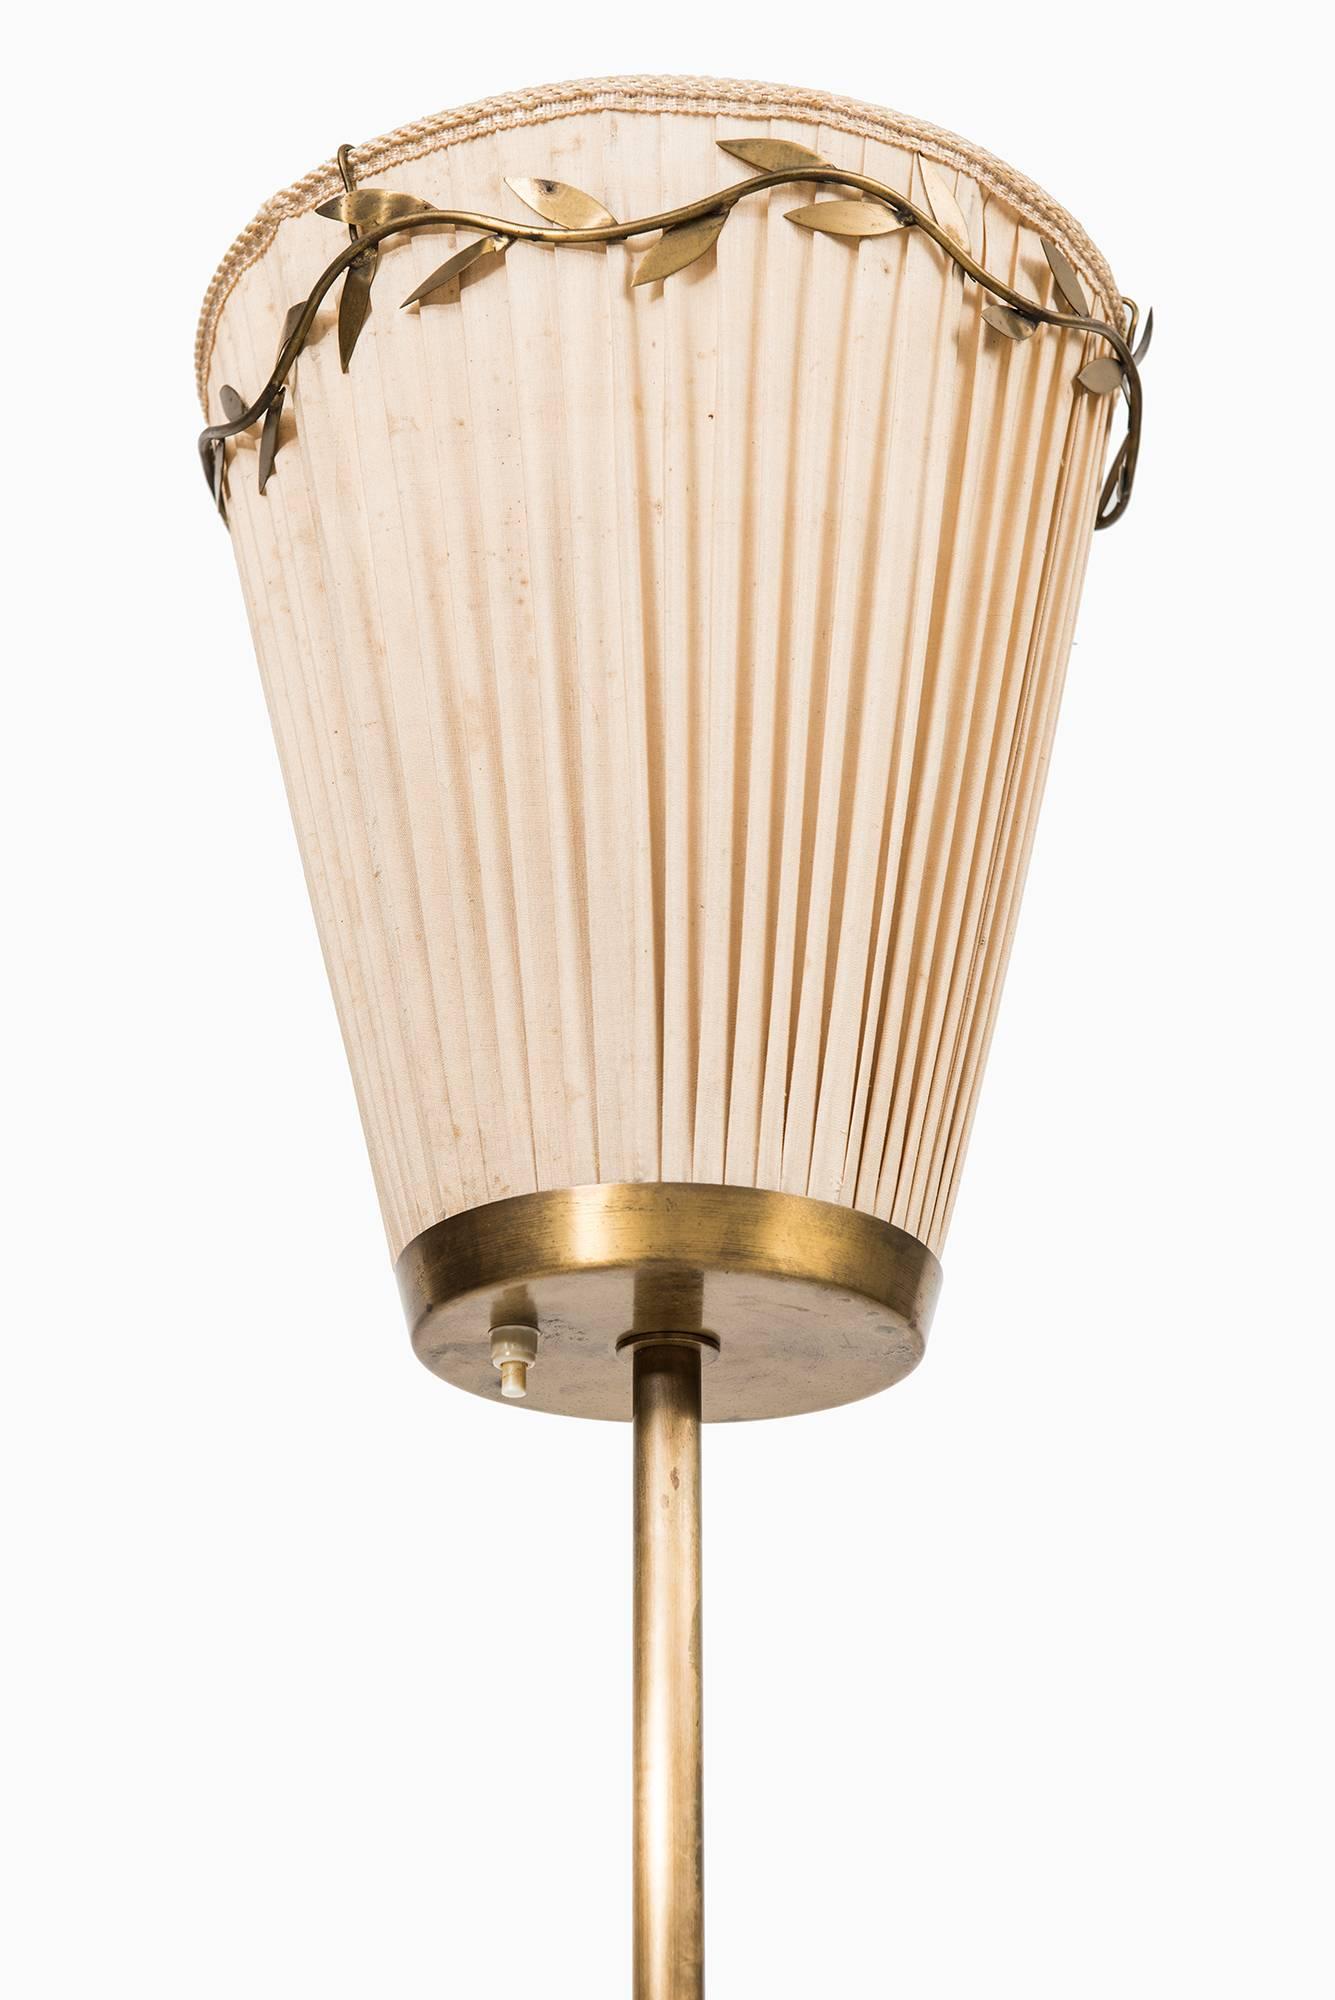 Very rare floor lamp designed by Hans Bergström. Produced by Ateljé Lyktan in Åhus, Sweden.